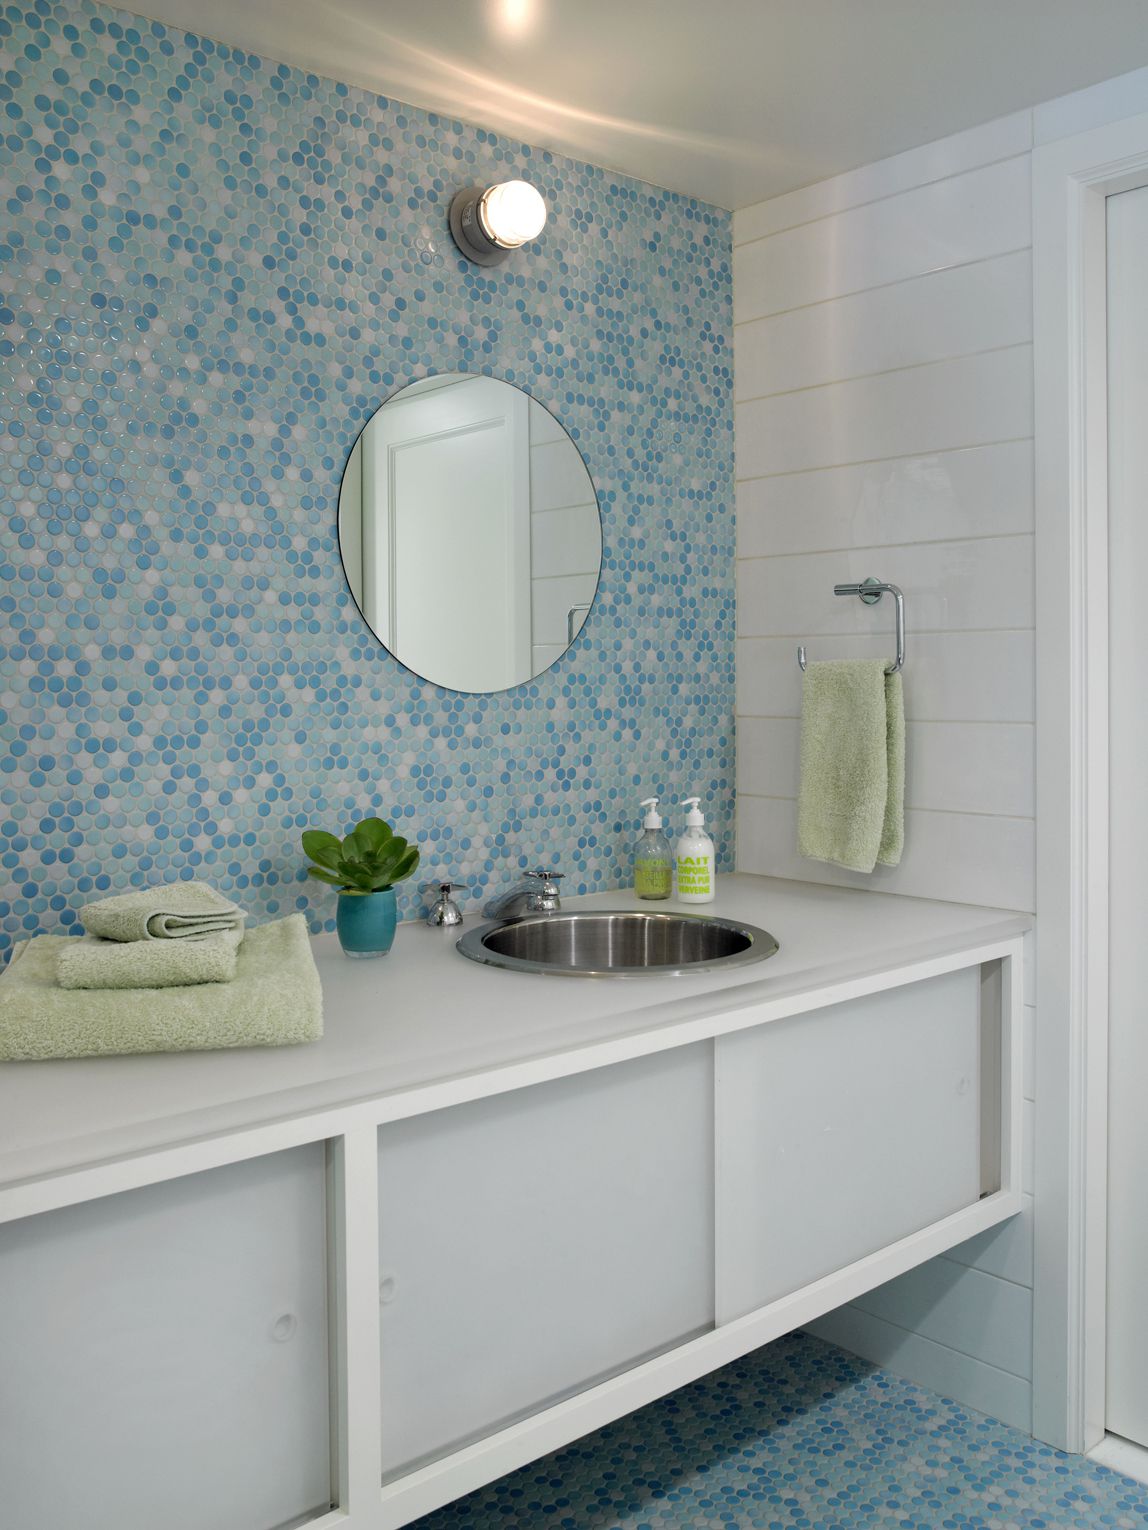 Bathroom Tile Designs 33 Bathroom Tile Design Ideas - Unique Tiled Bathroom CWAHFRB